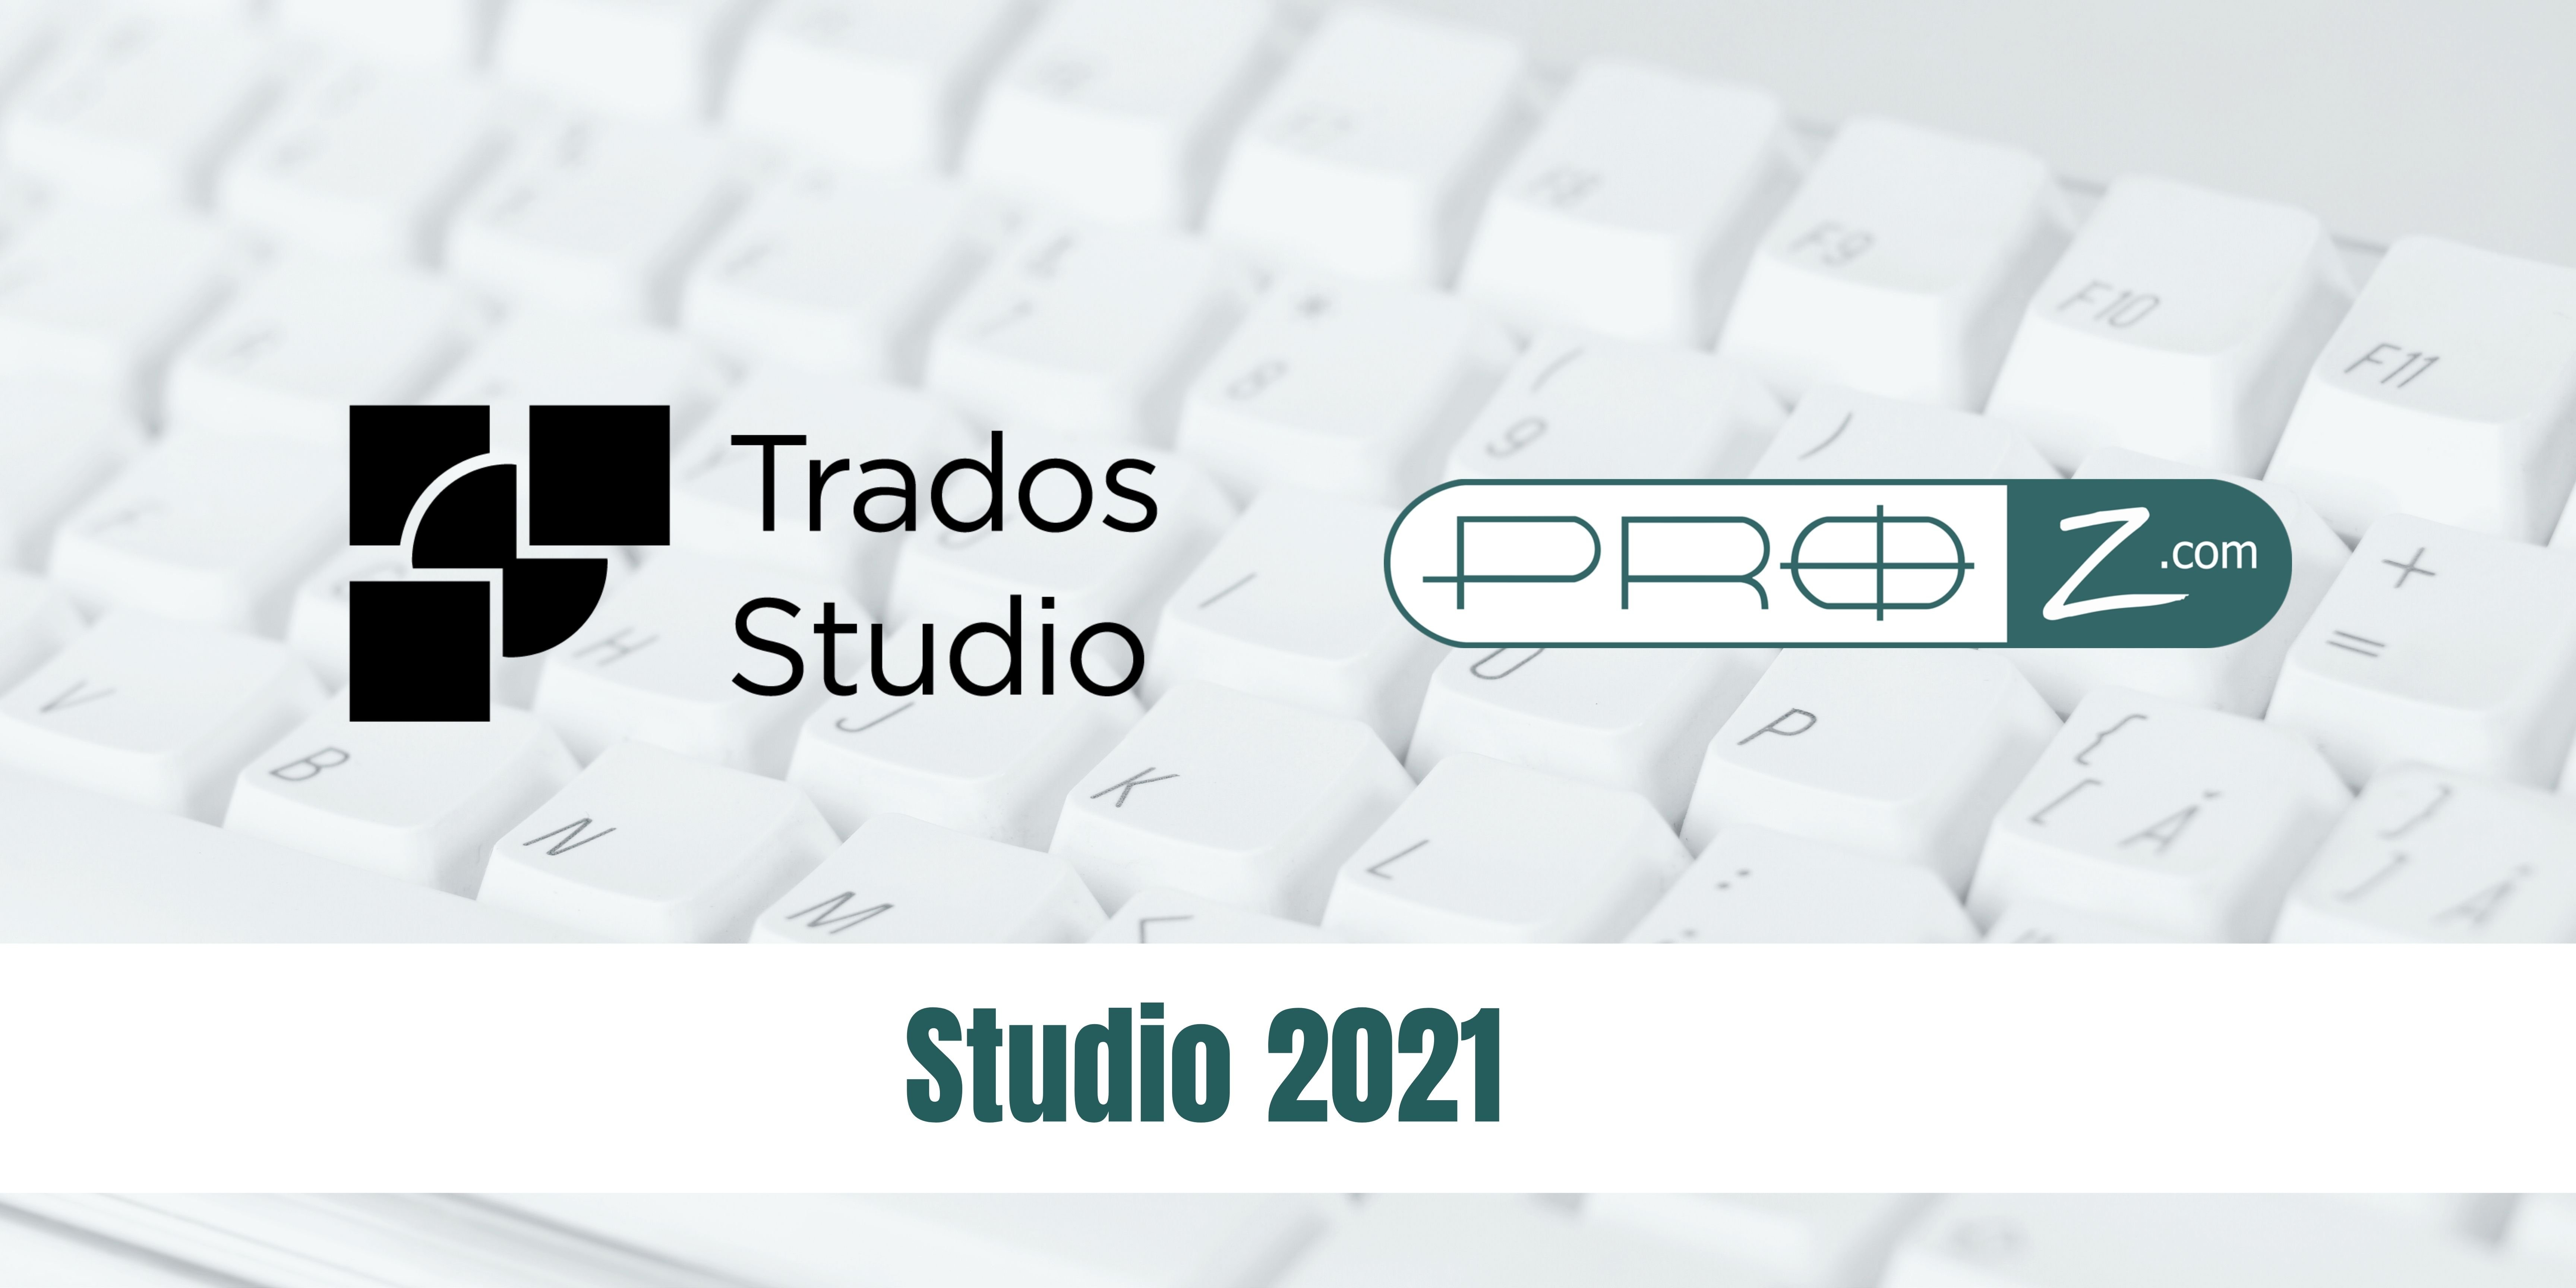 Trados Studio 2021 (6)